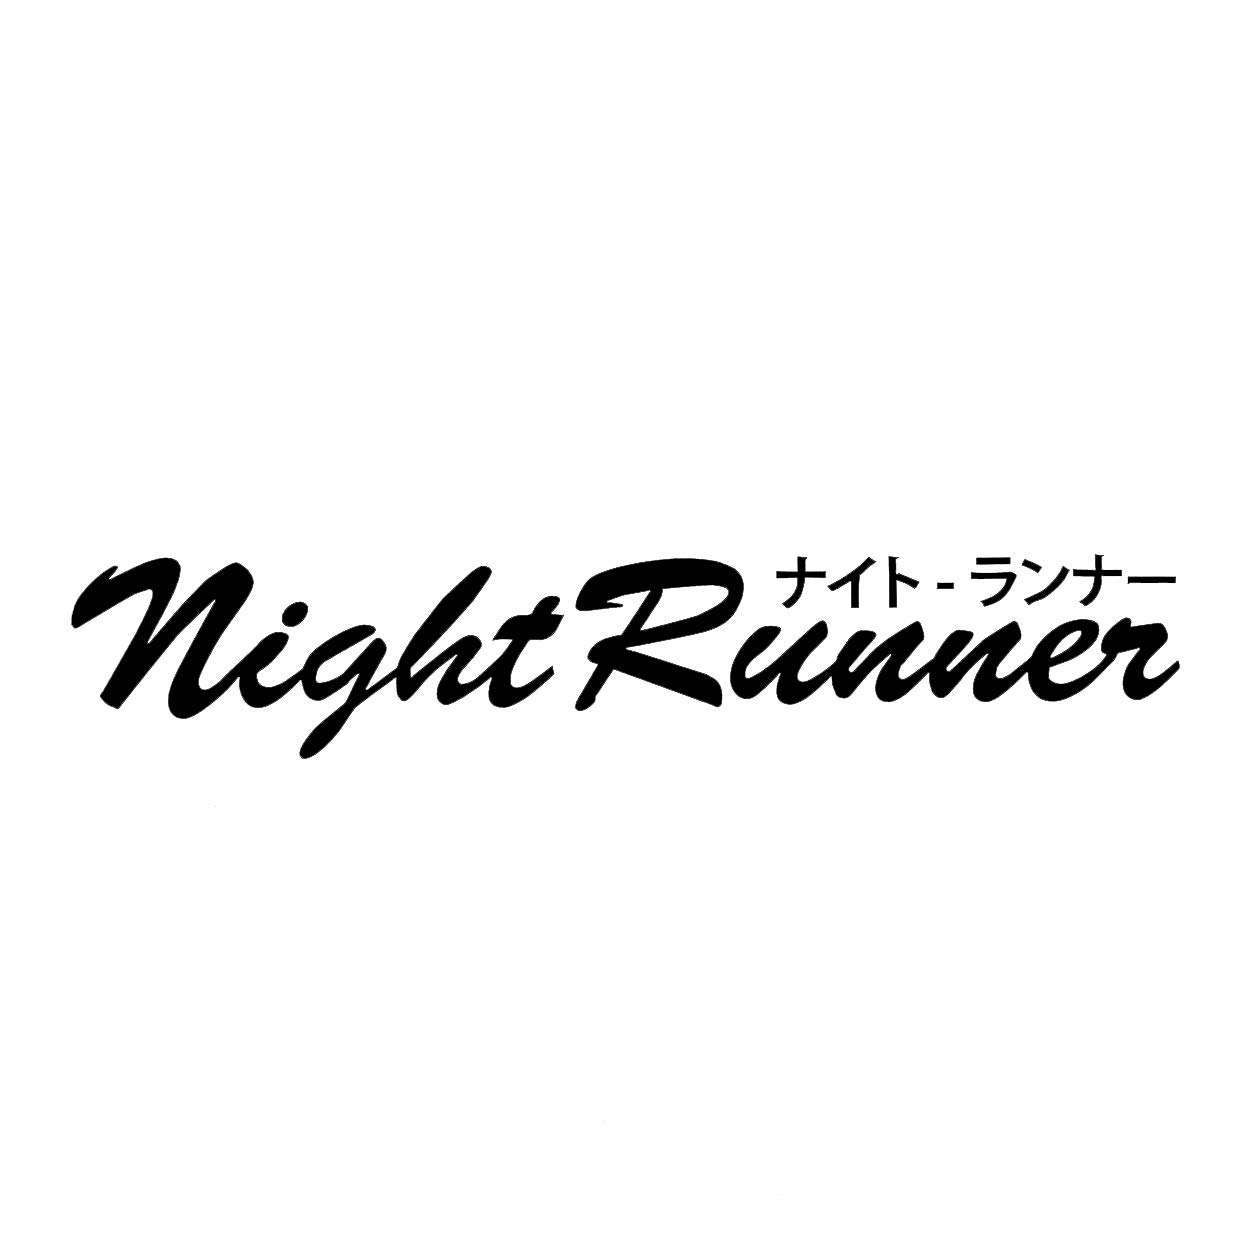 Dekal - Night Runner